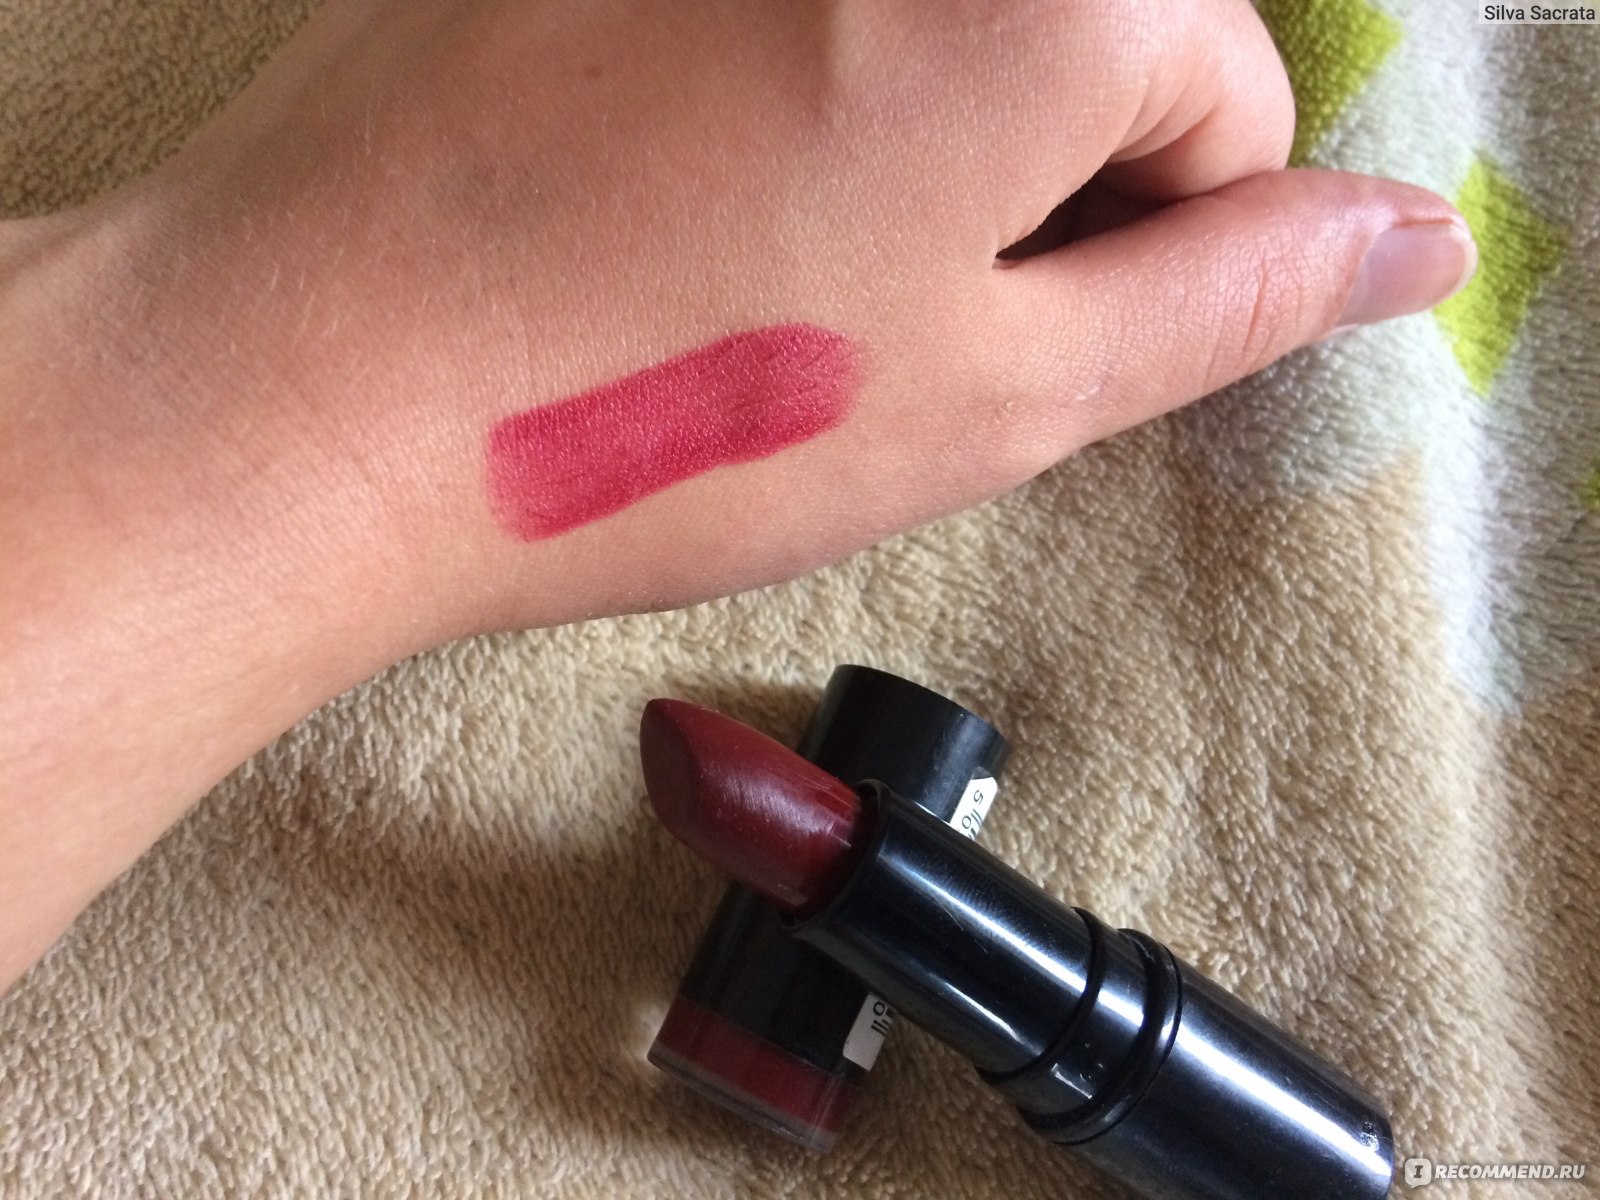 Makeup Revolution Amazing Lipstick